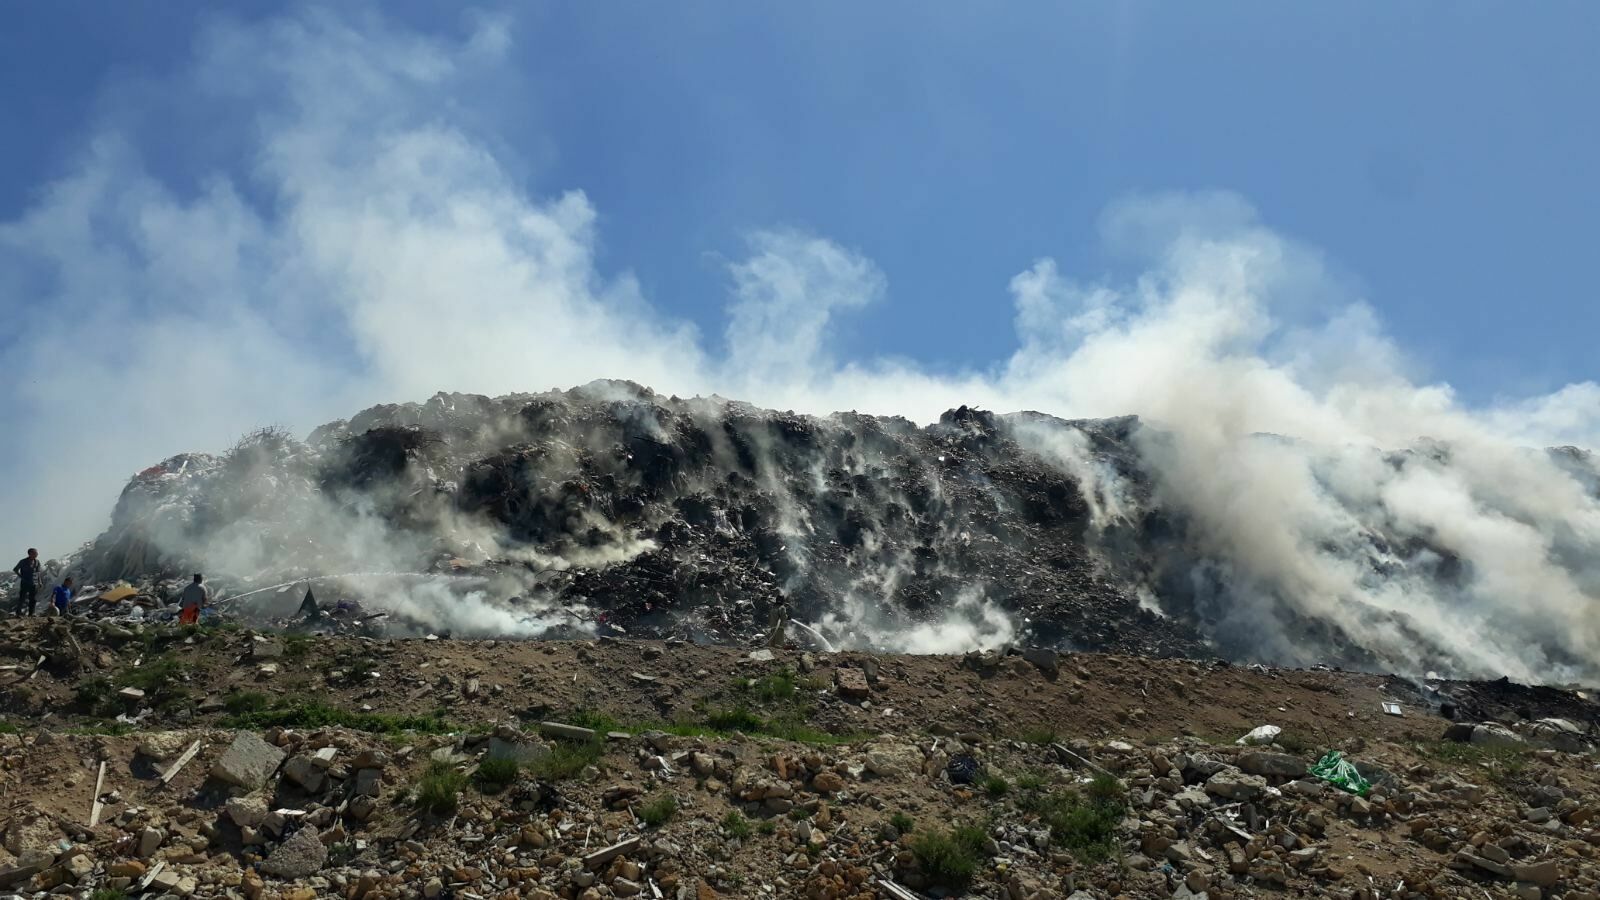 The landfill caught fire in Norilsk